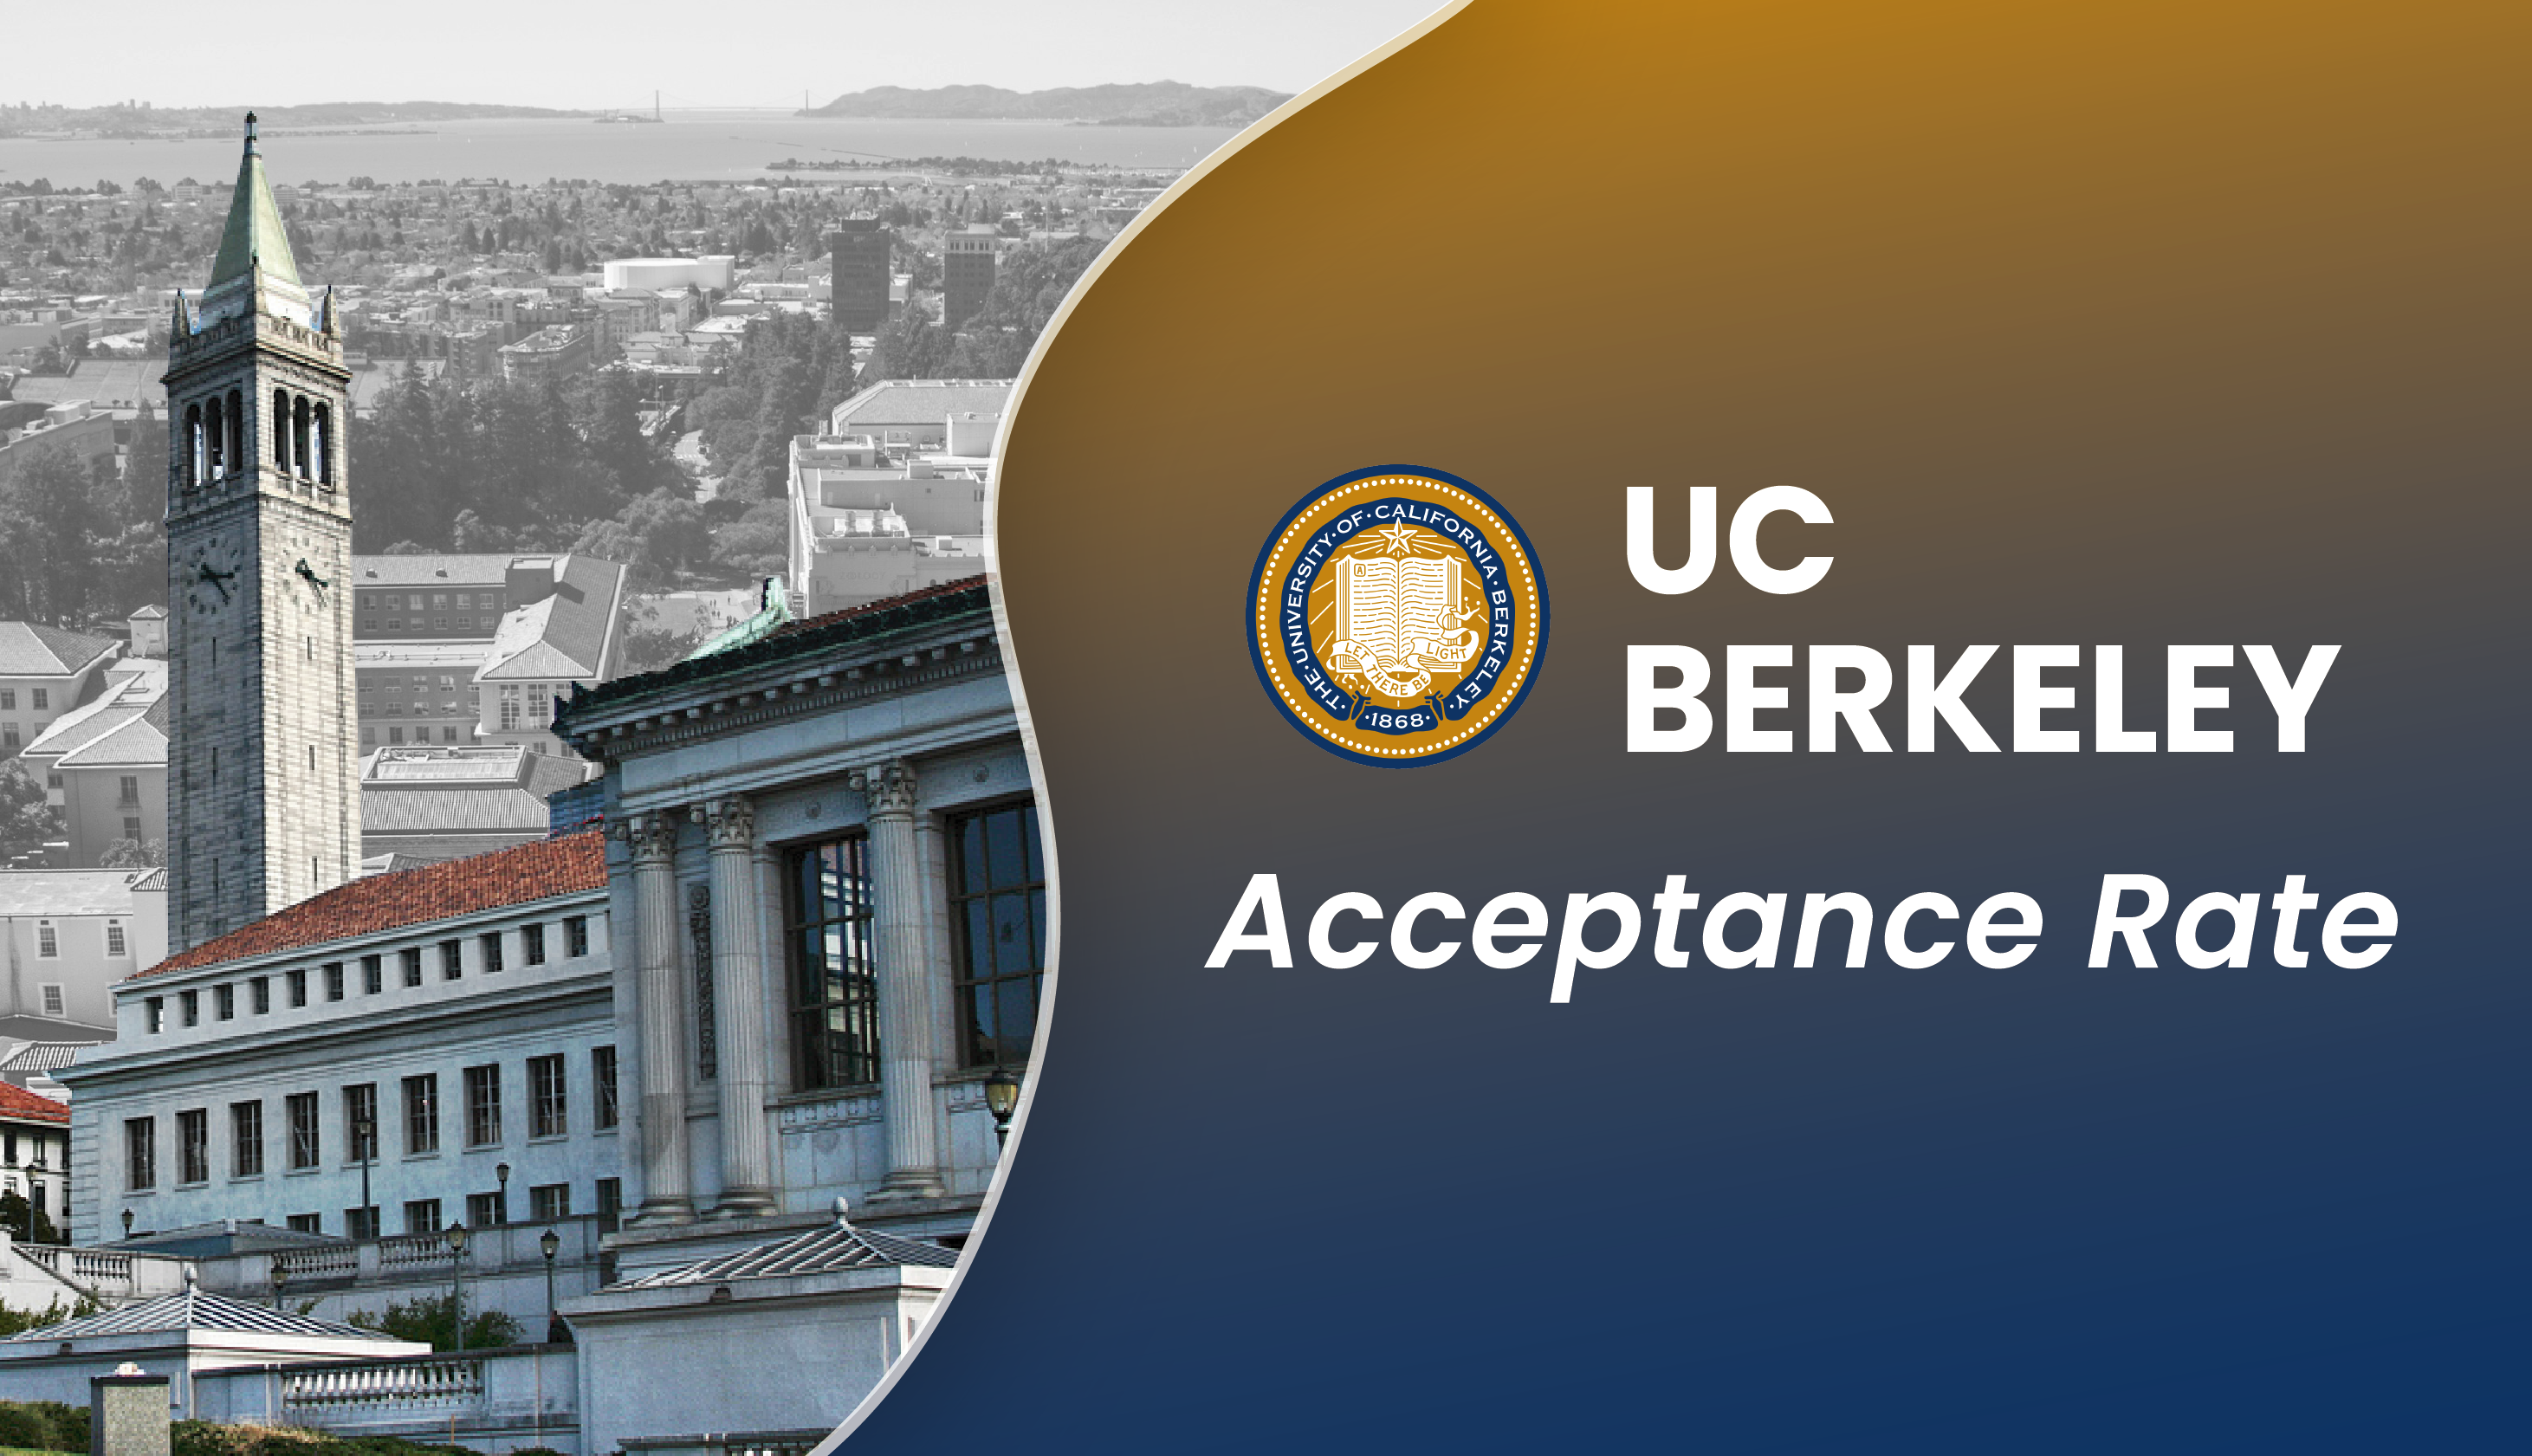 uc berkeley economics phd acceptance rate